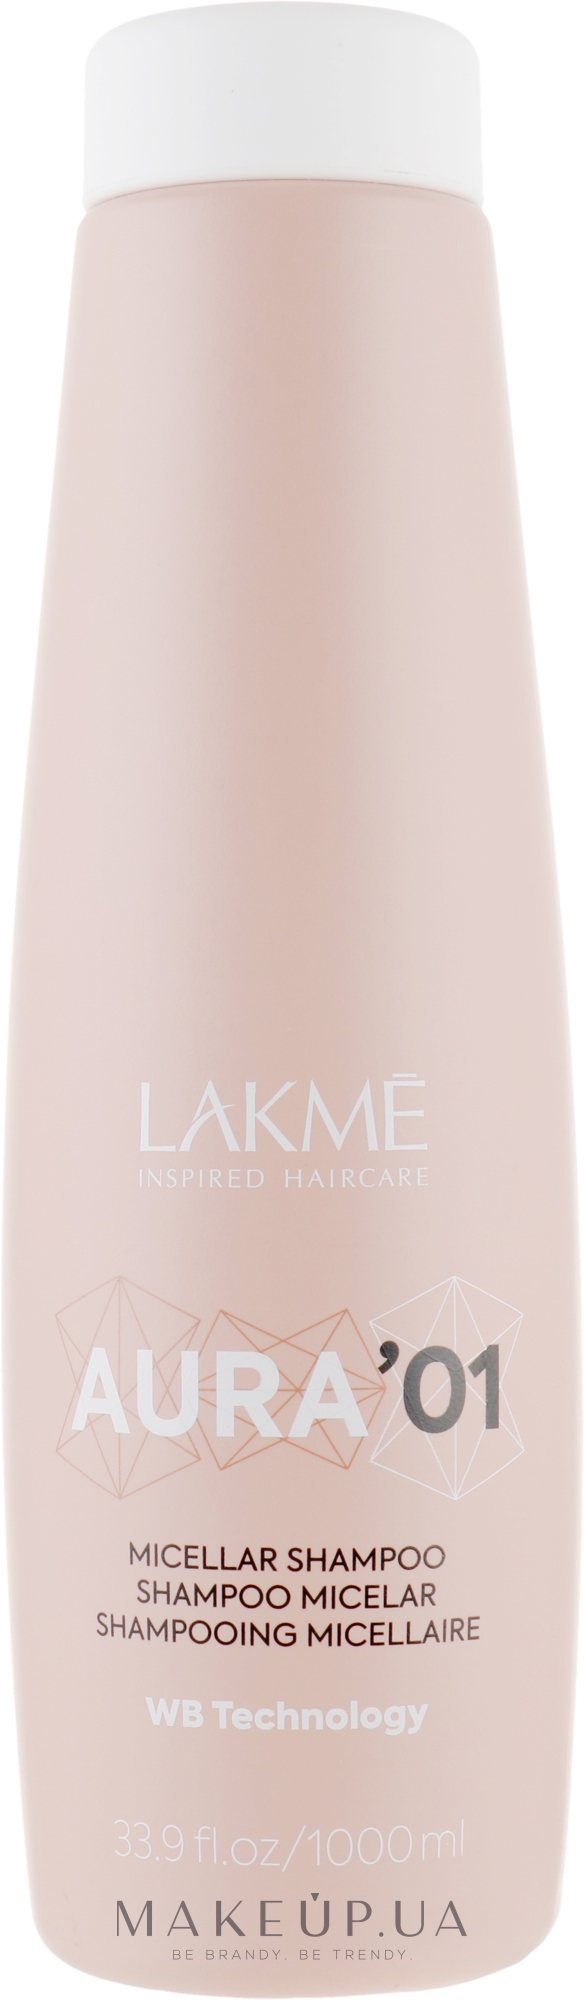 Мицеллярный шампунь для волос - Lakme Aura '01 Micellar Shampoo — фото 1000ml